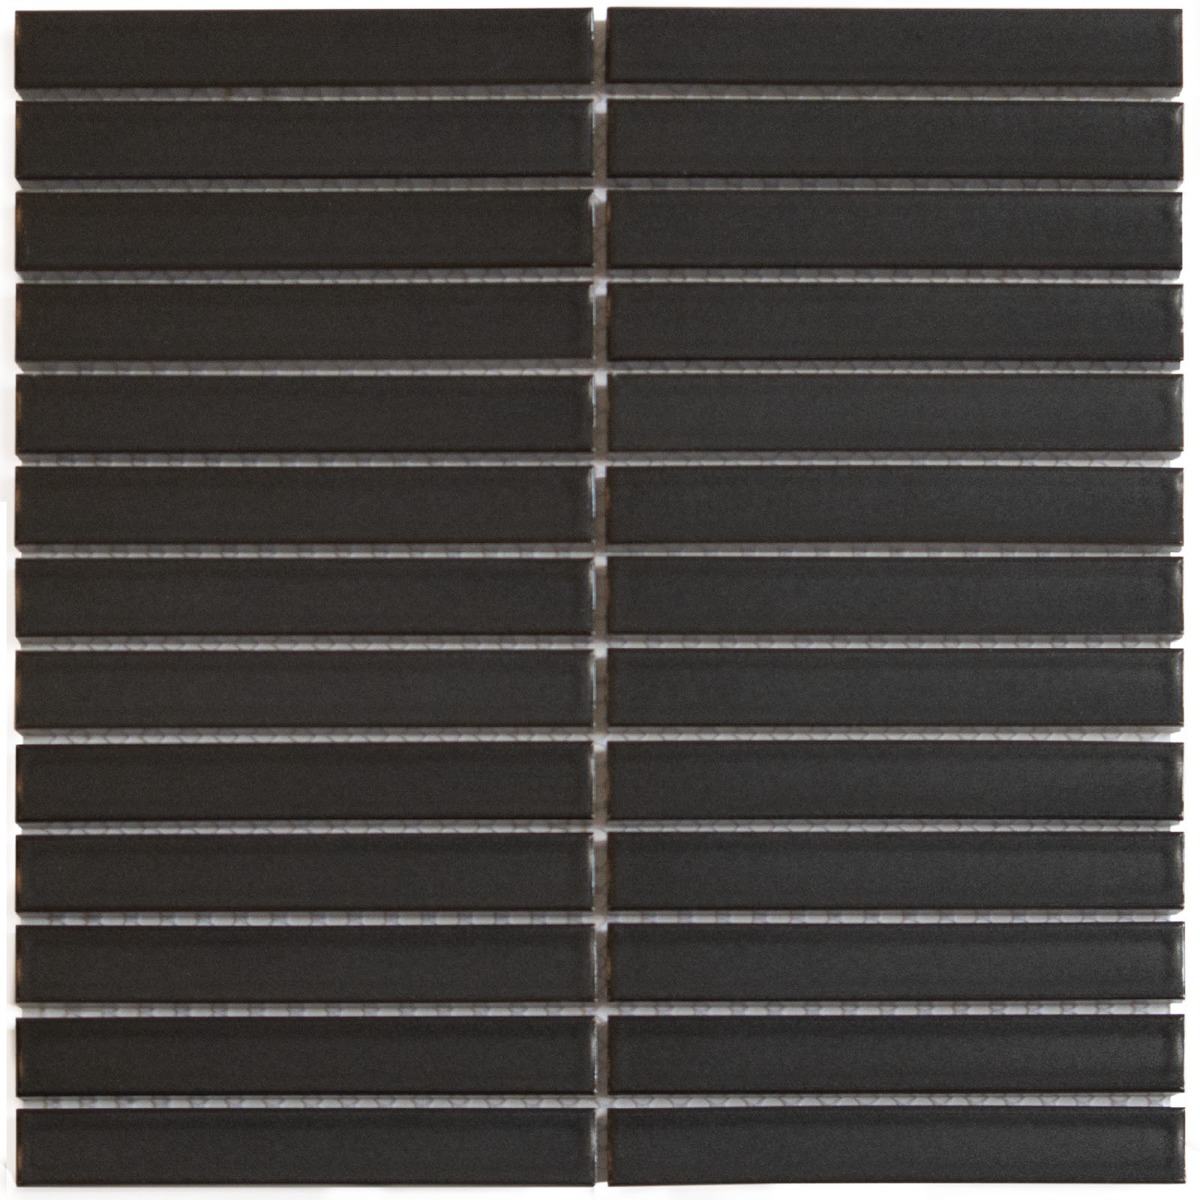 The Mosaic Factory Tegelsample:  Carbon Shades mozaïek tegels 30x30cm antraciet mix